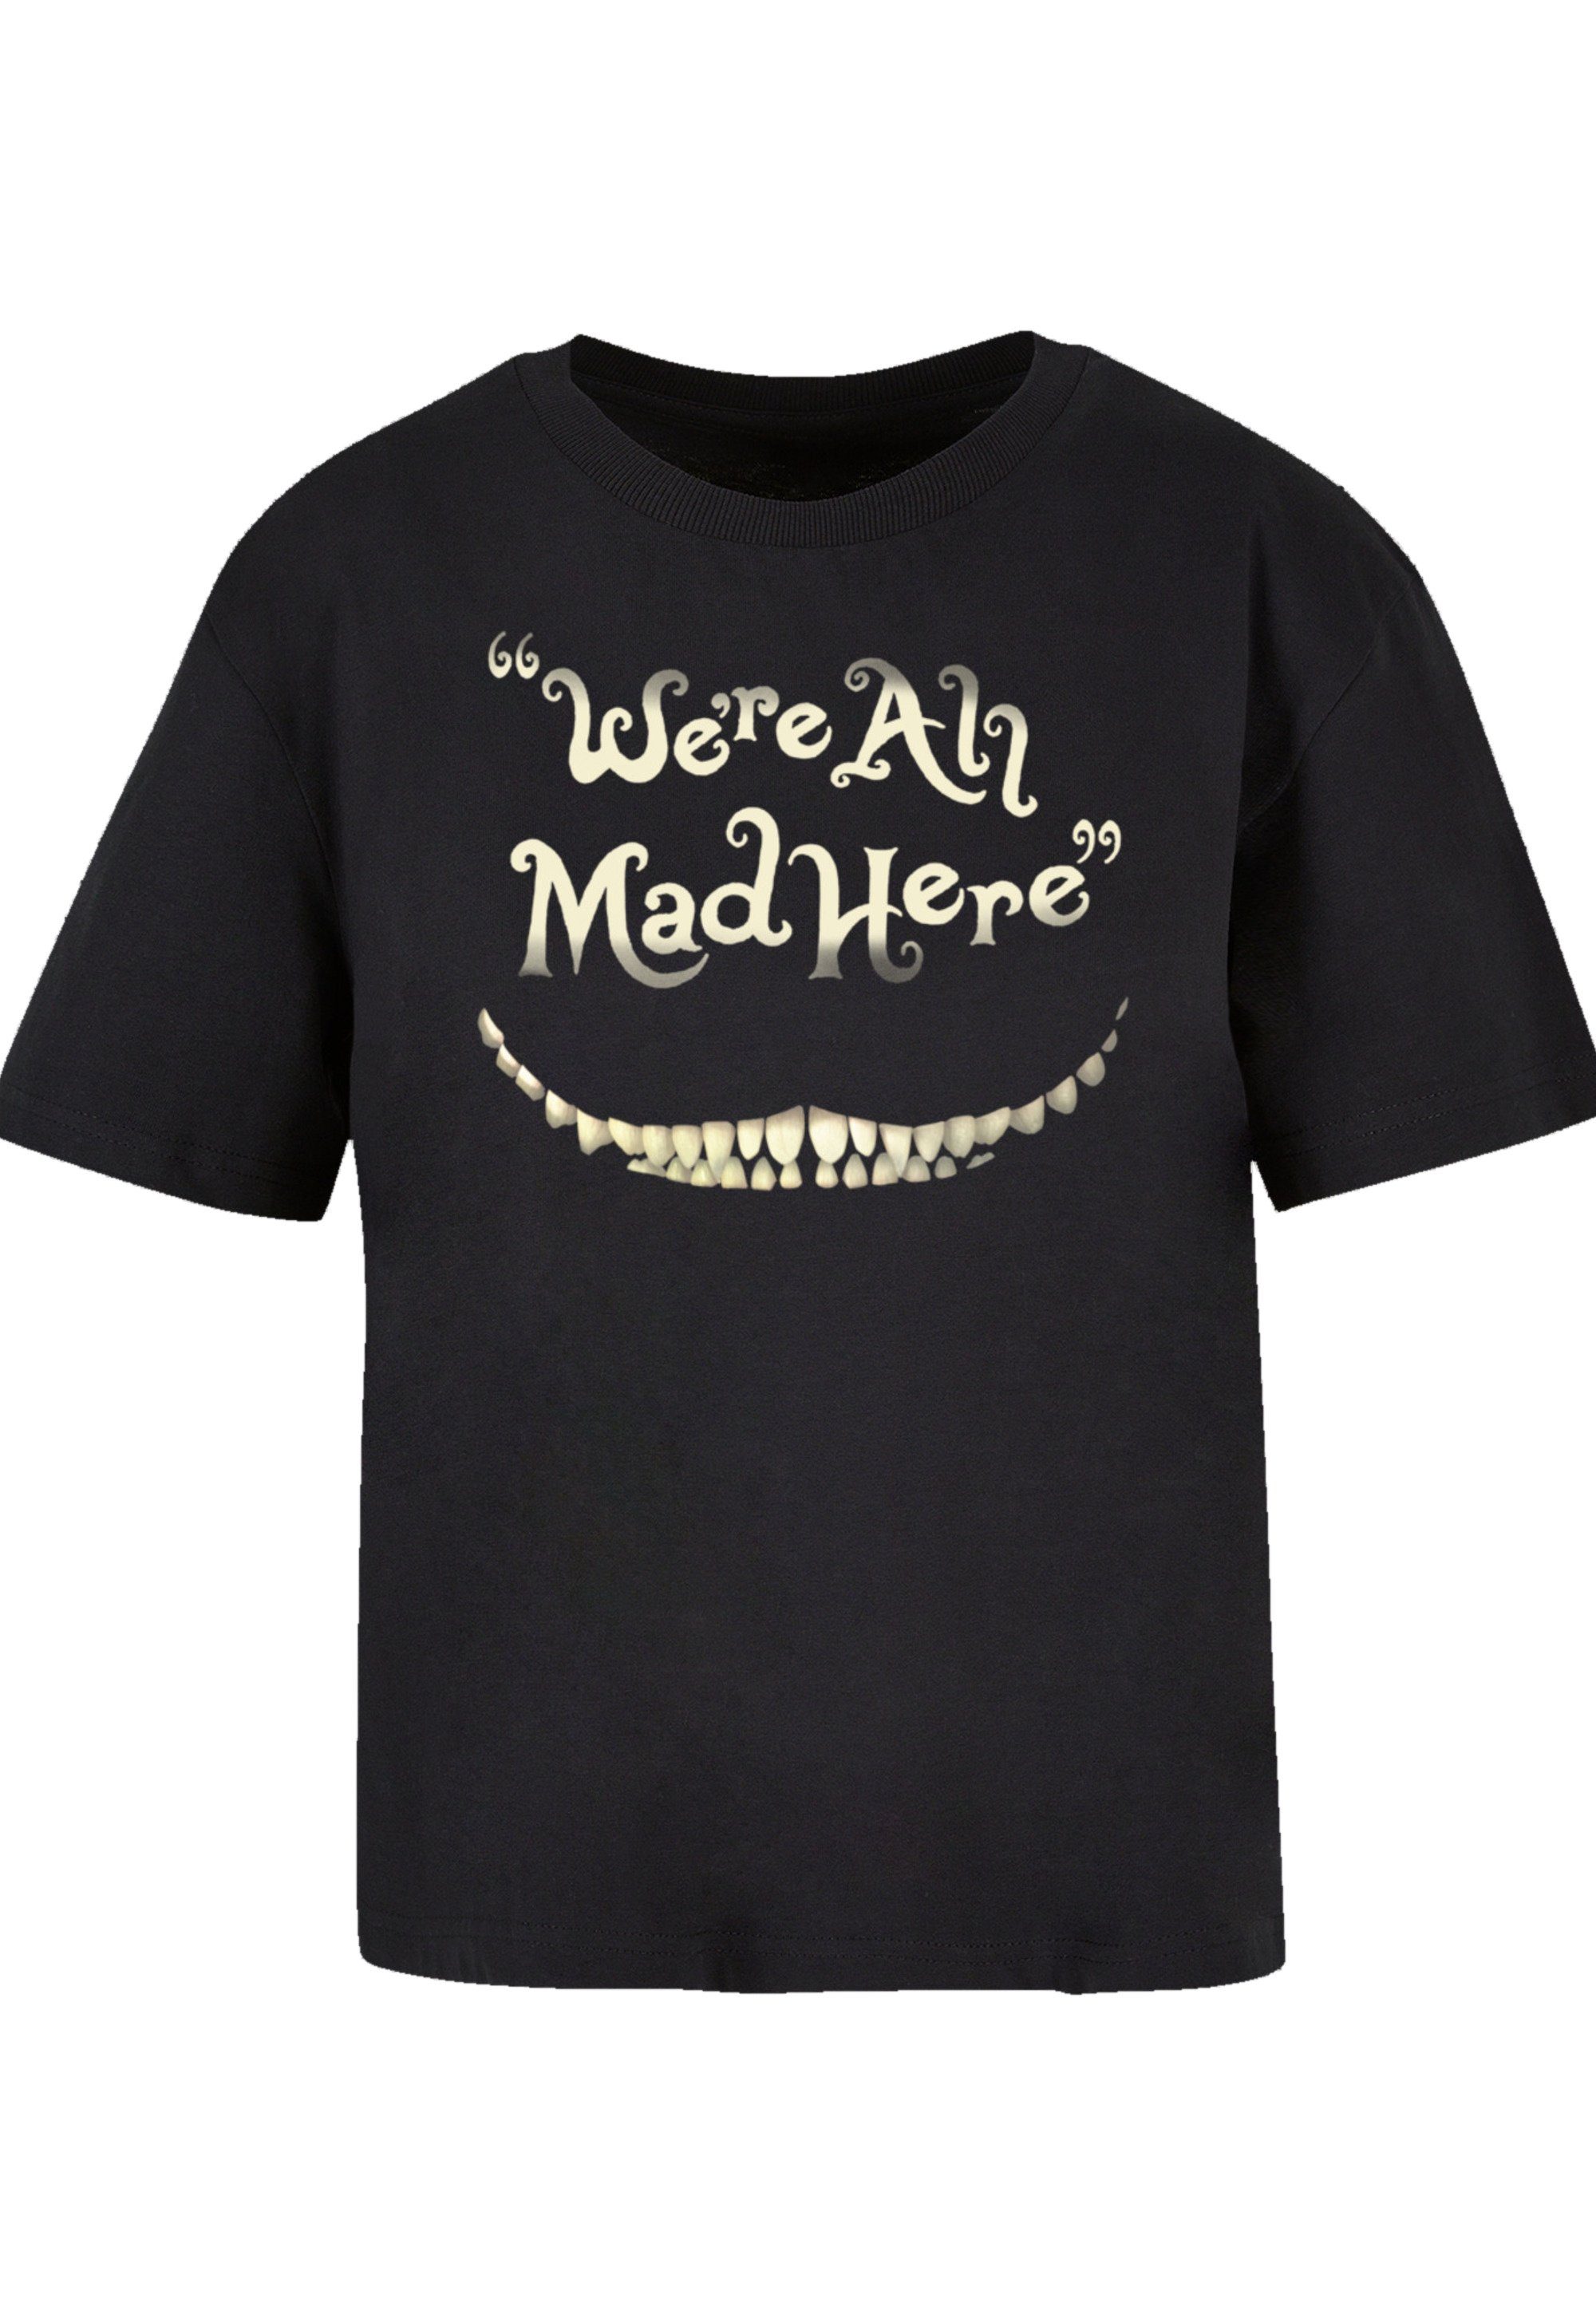 F4NT4STIC T-Shirt Disney im Alice Qualität Here Smile Premium Wunderland Mad